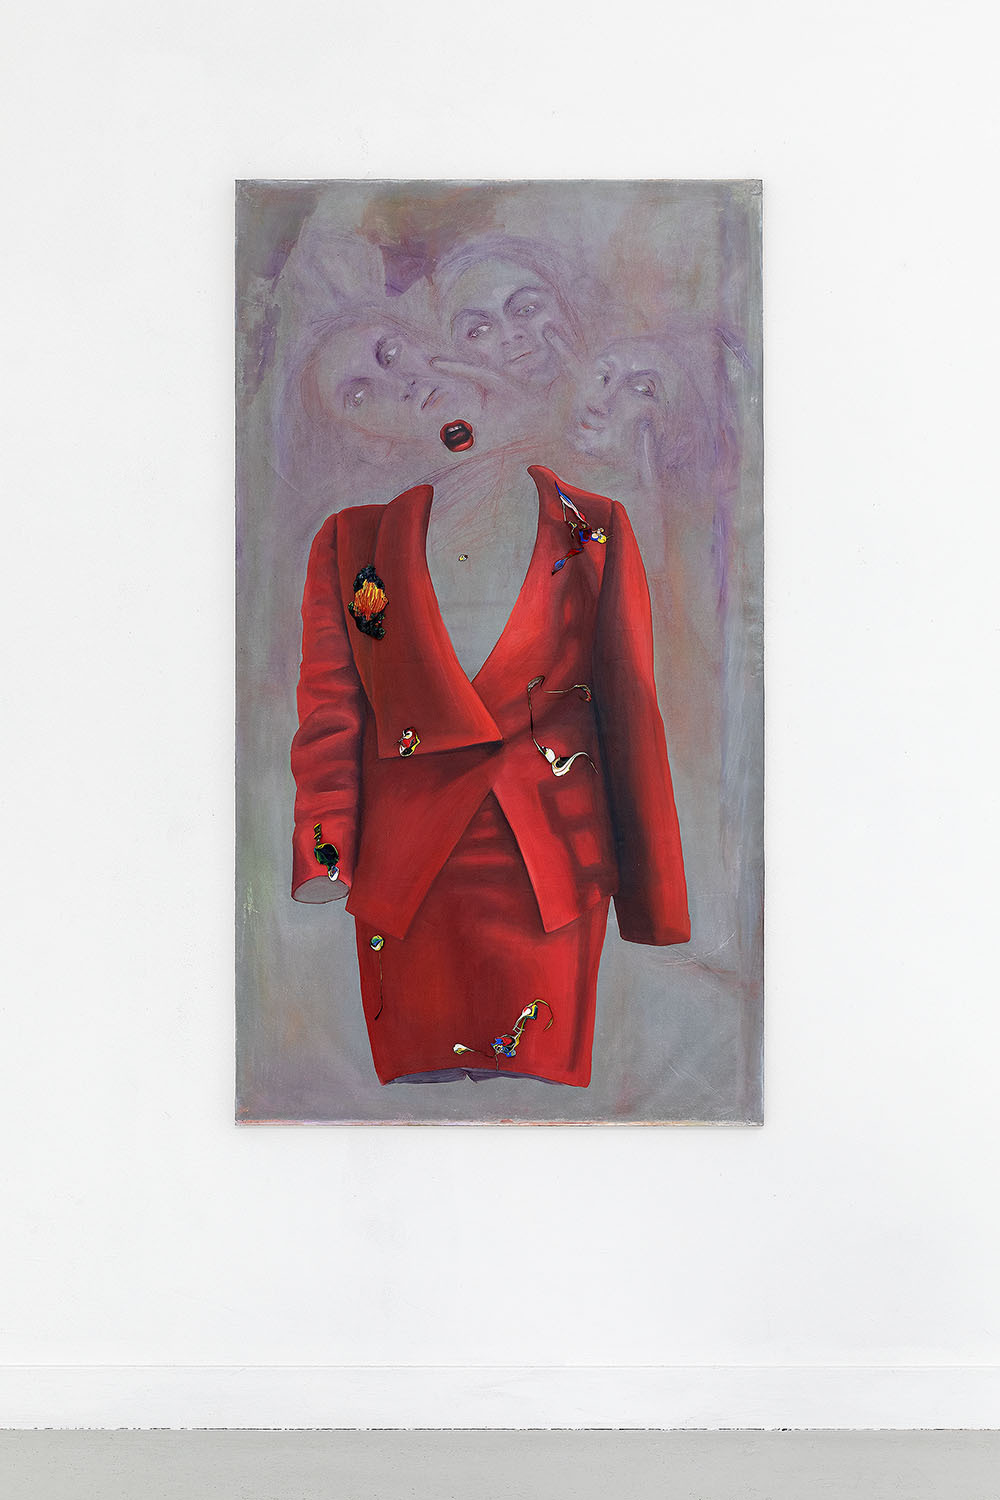 Mathilde Ganancia, Unexecutive figurine with no more plan, 2020, mixed media, 145 x 80 cm